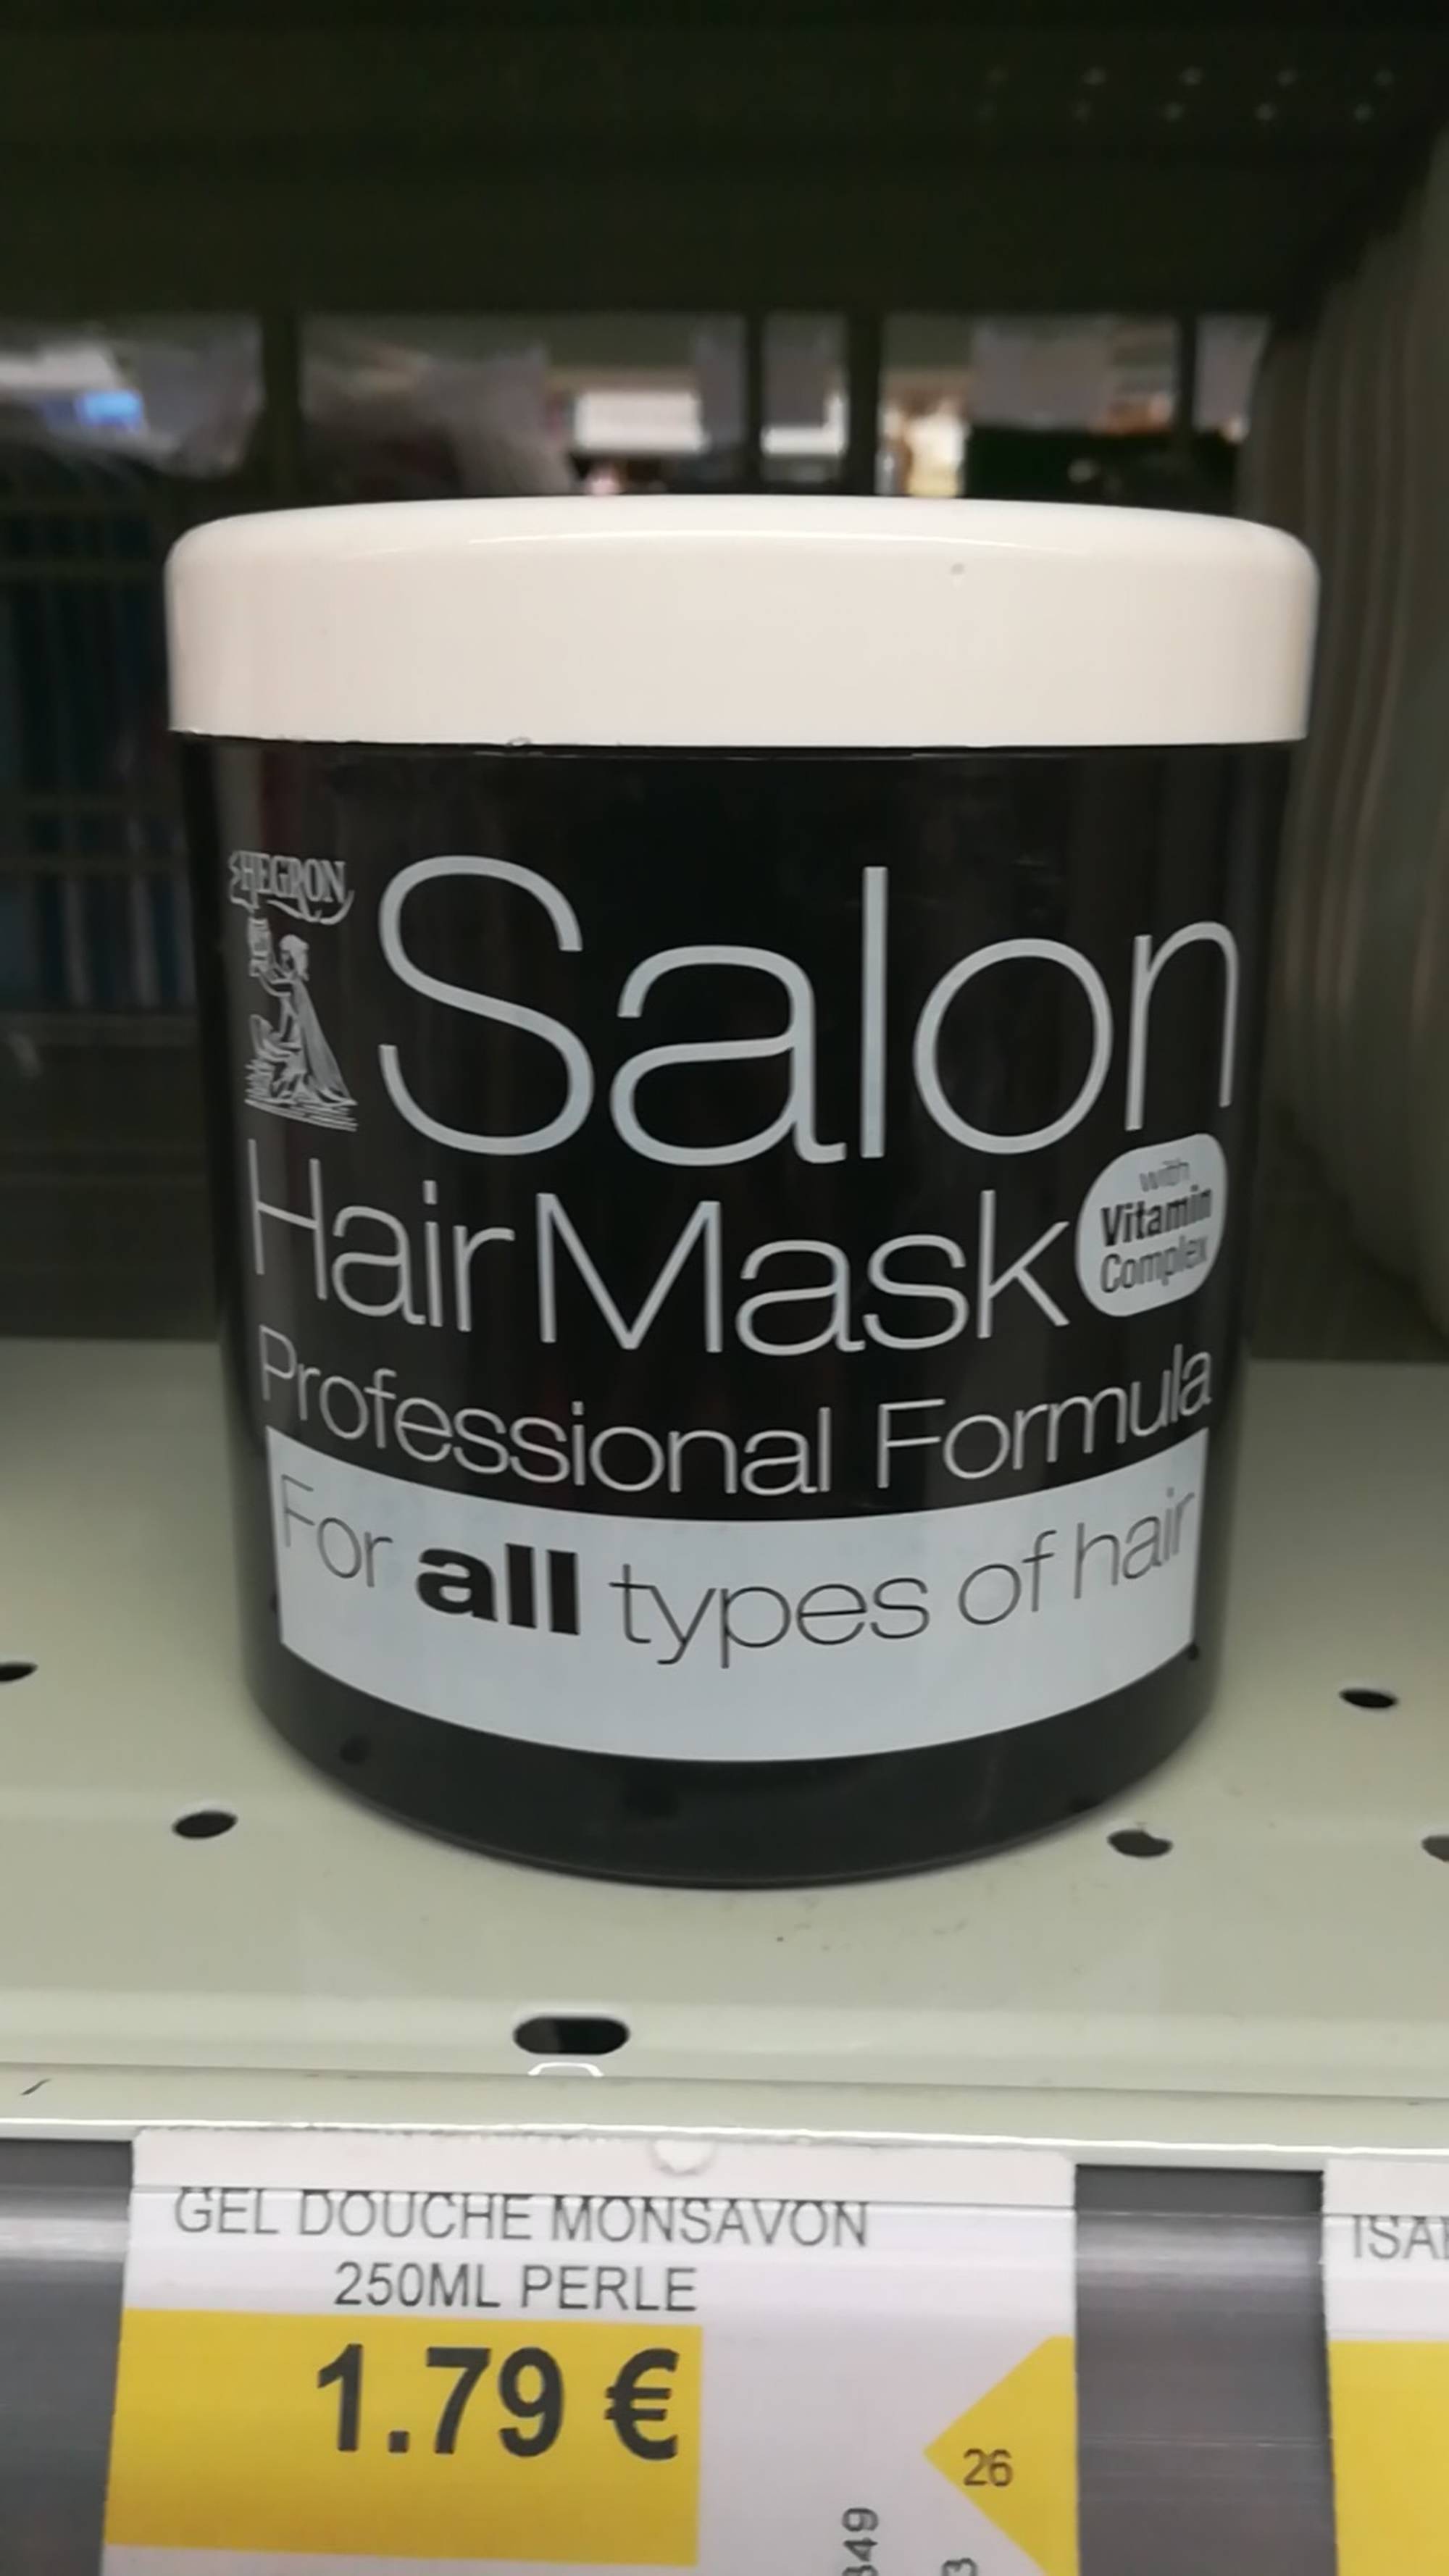 HEGRON - Salon - Hair mask 